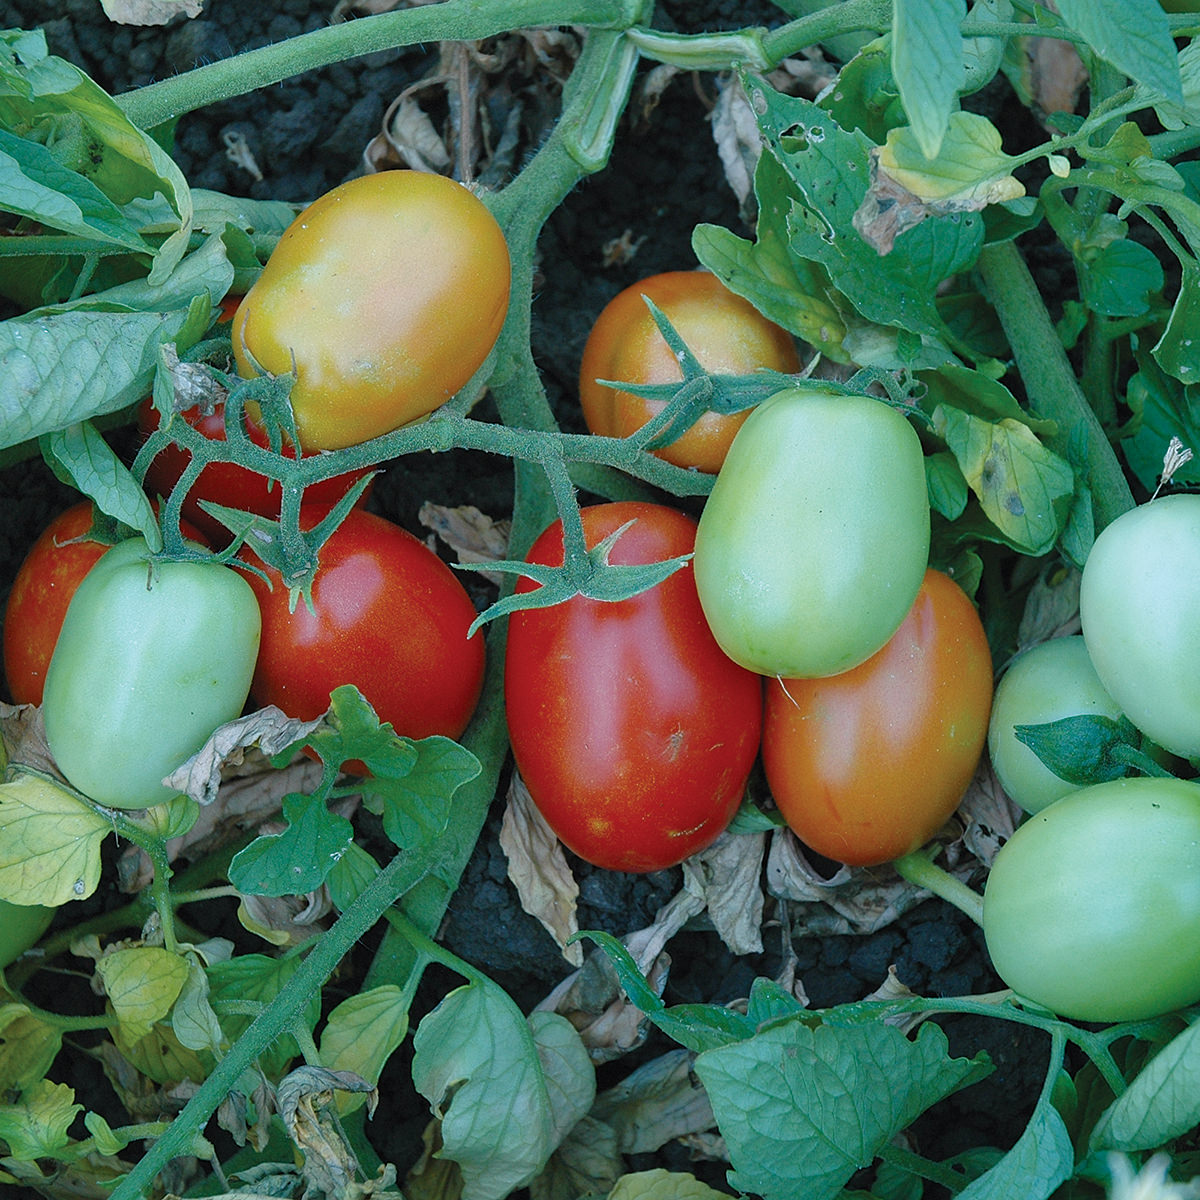 Patty F1 Hybrid Tomato Seeds